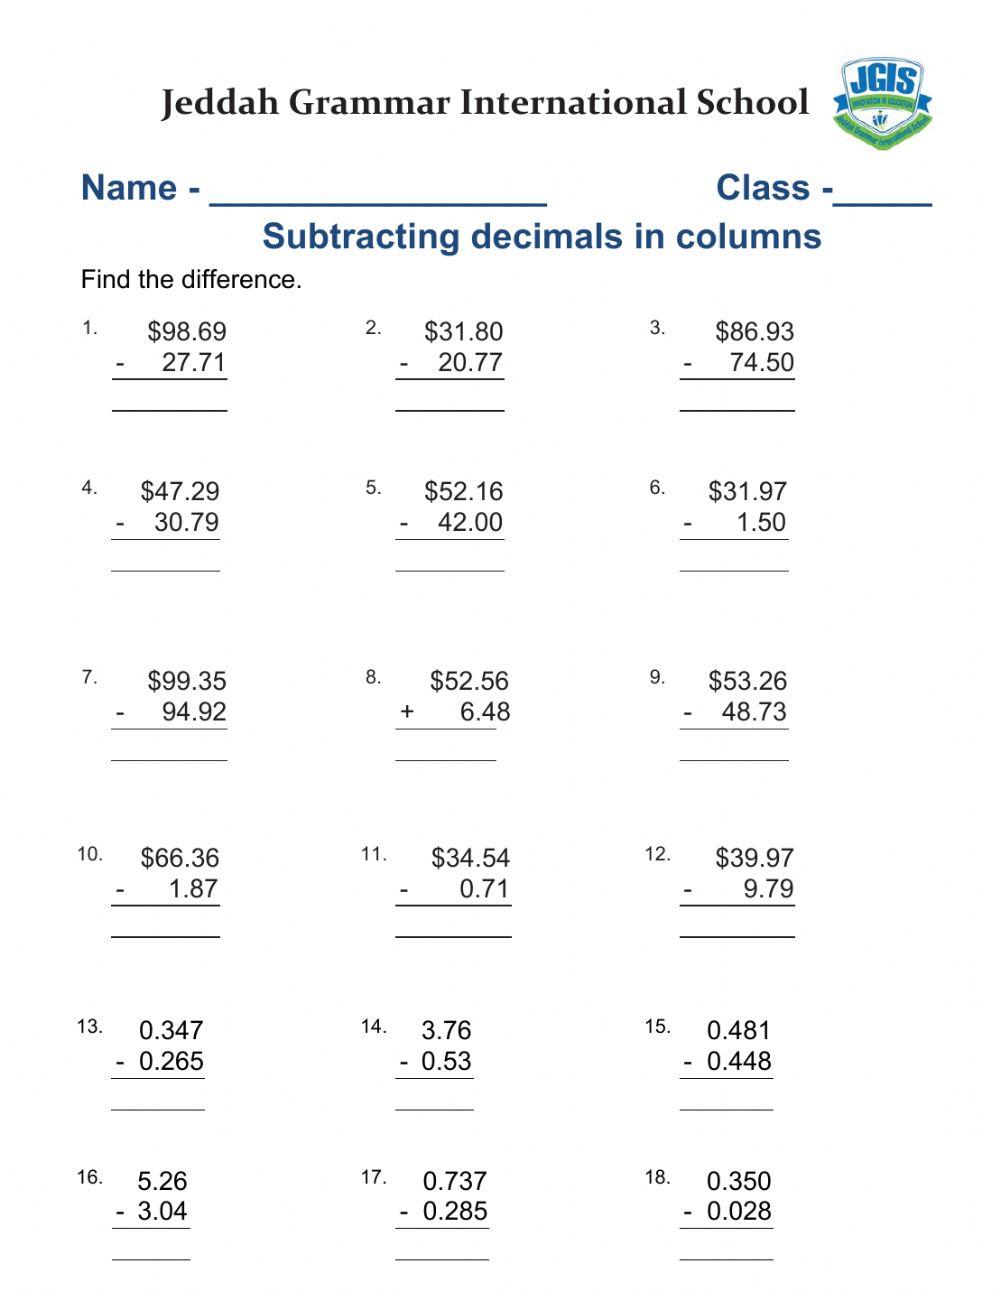 Subtracting decimals in columns